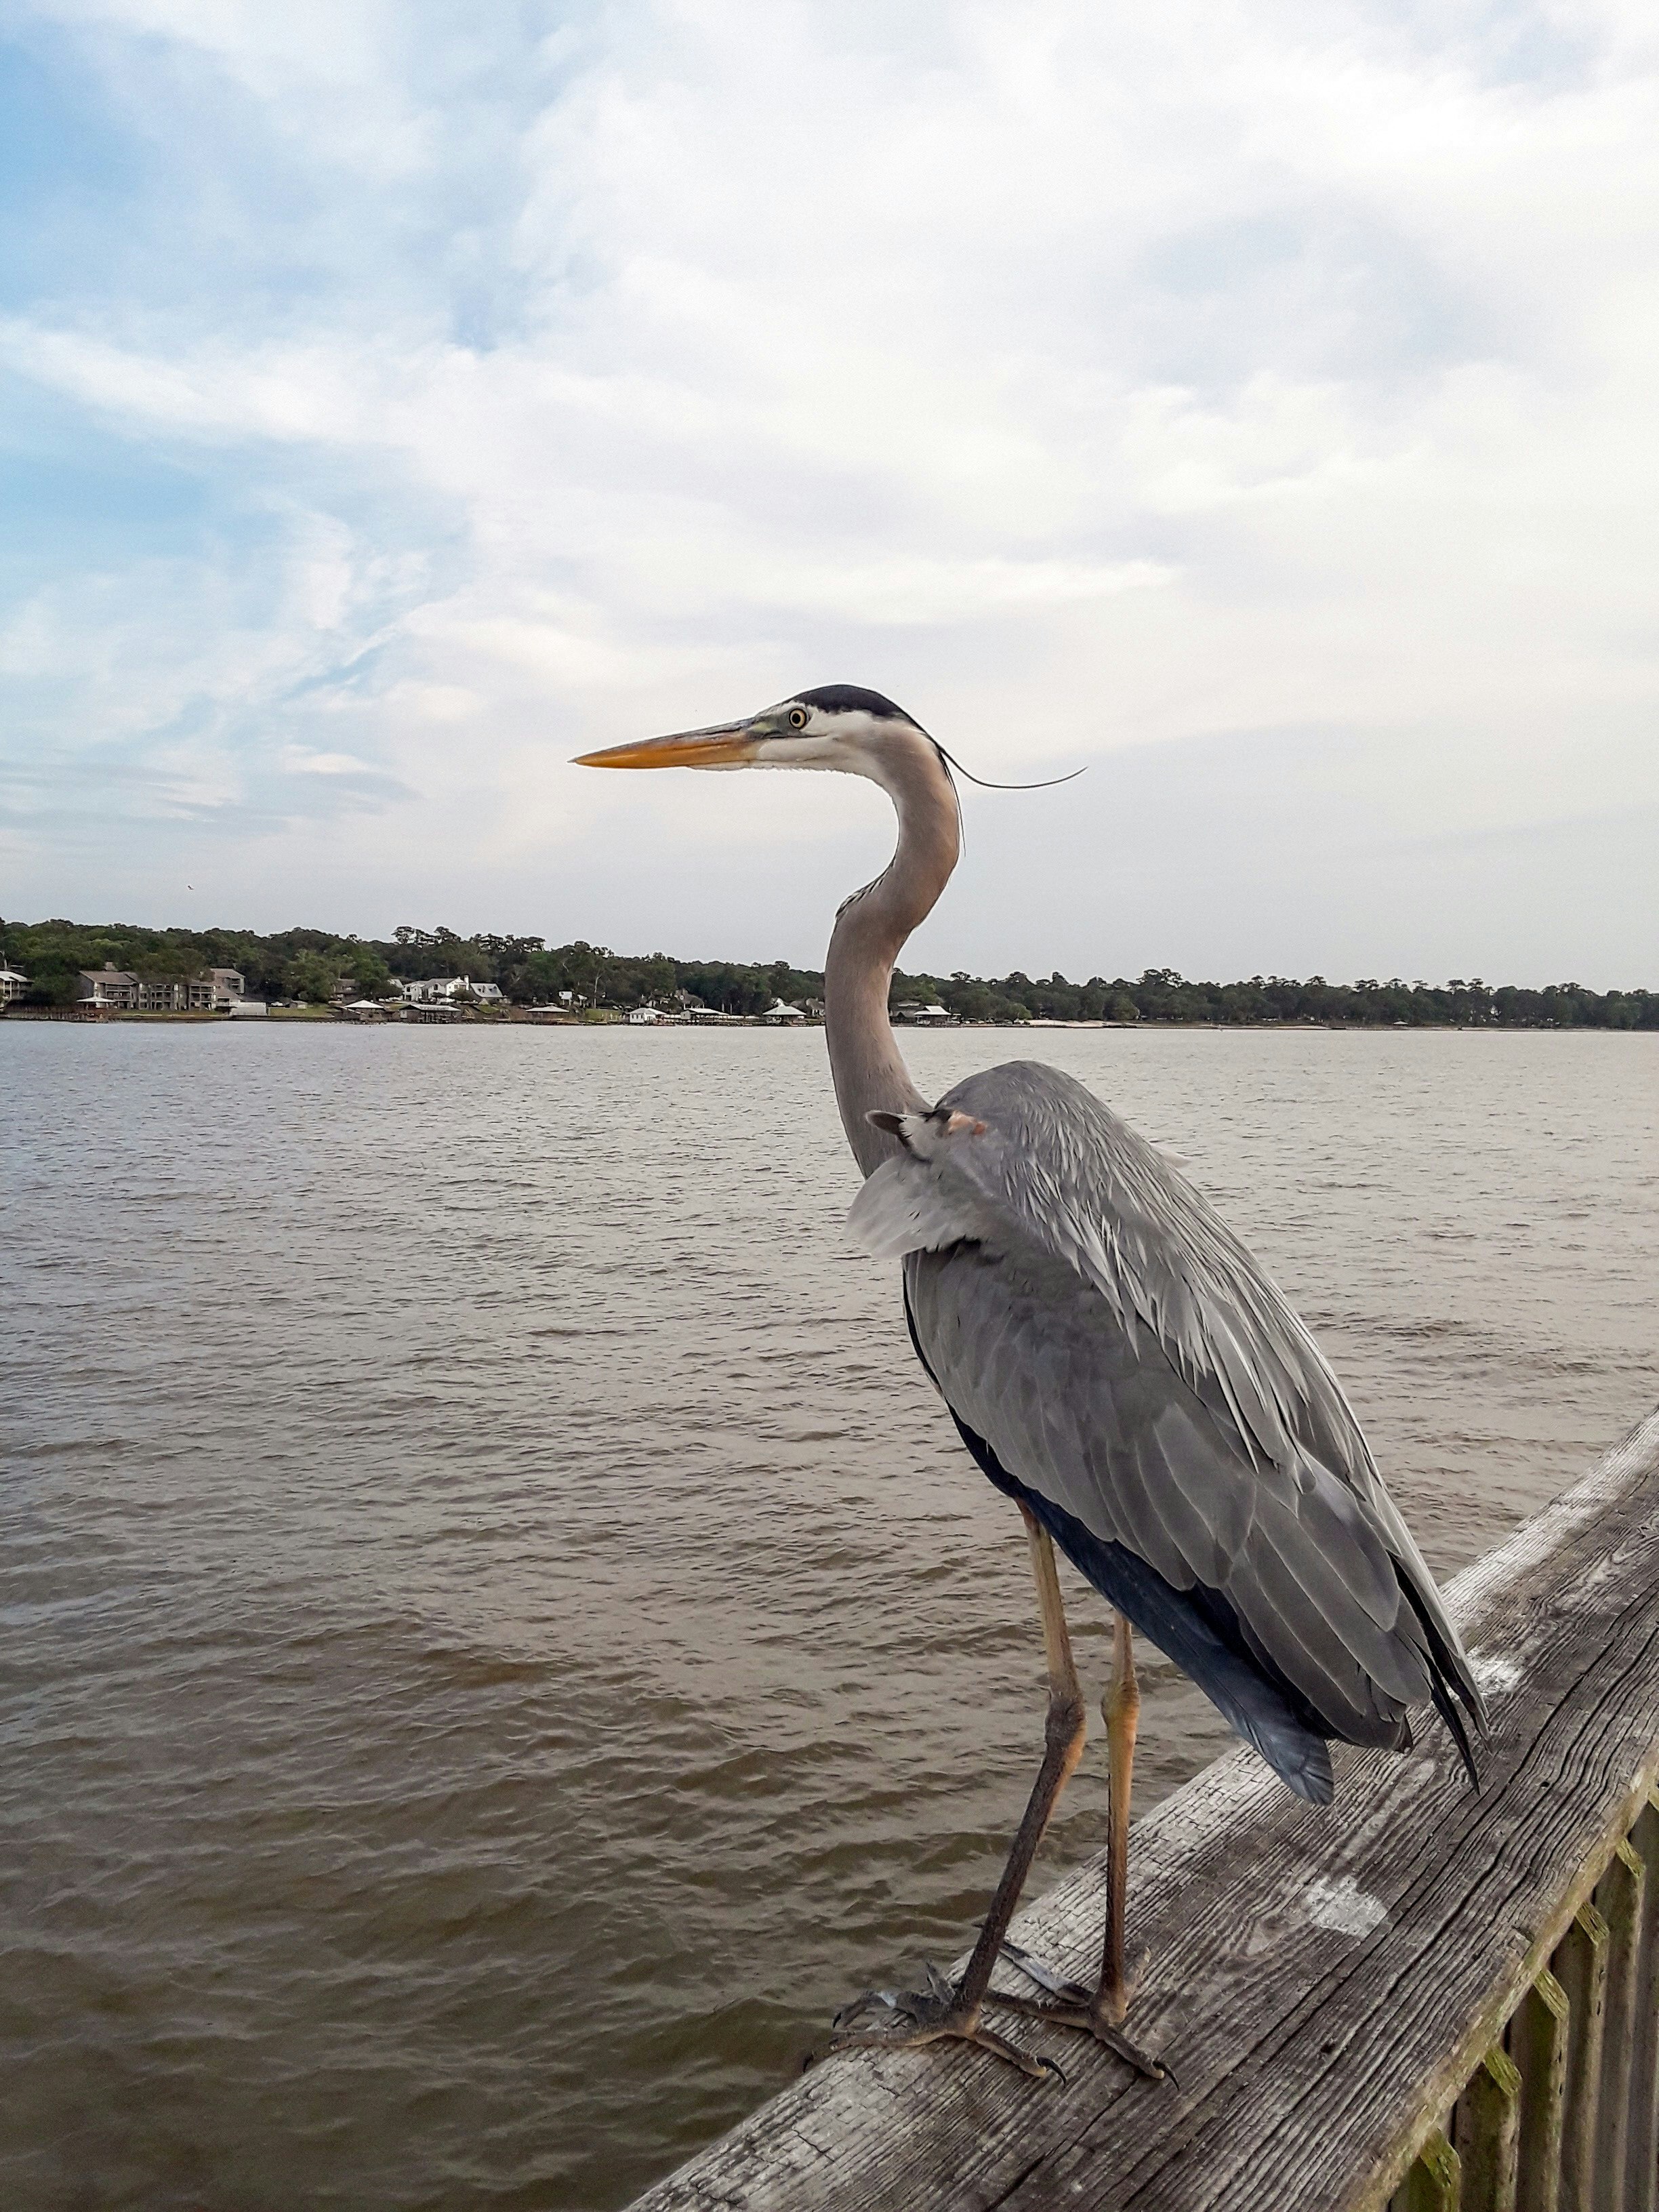 Blue Heron at Fairhope Pier on Mobile Bay, Alabama